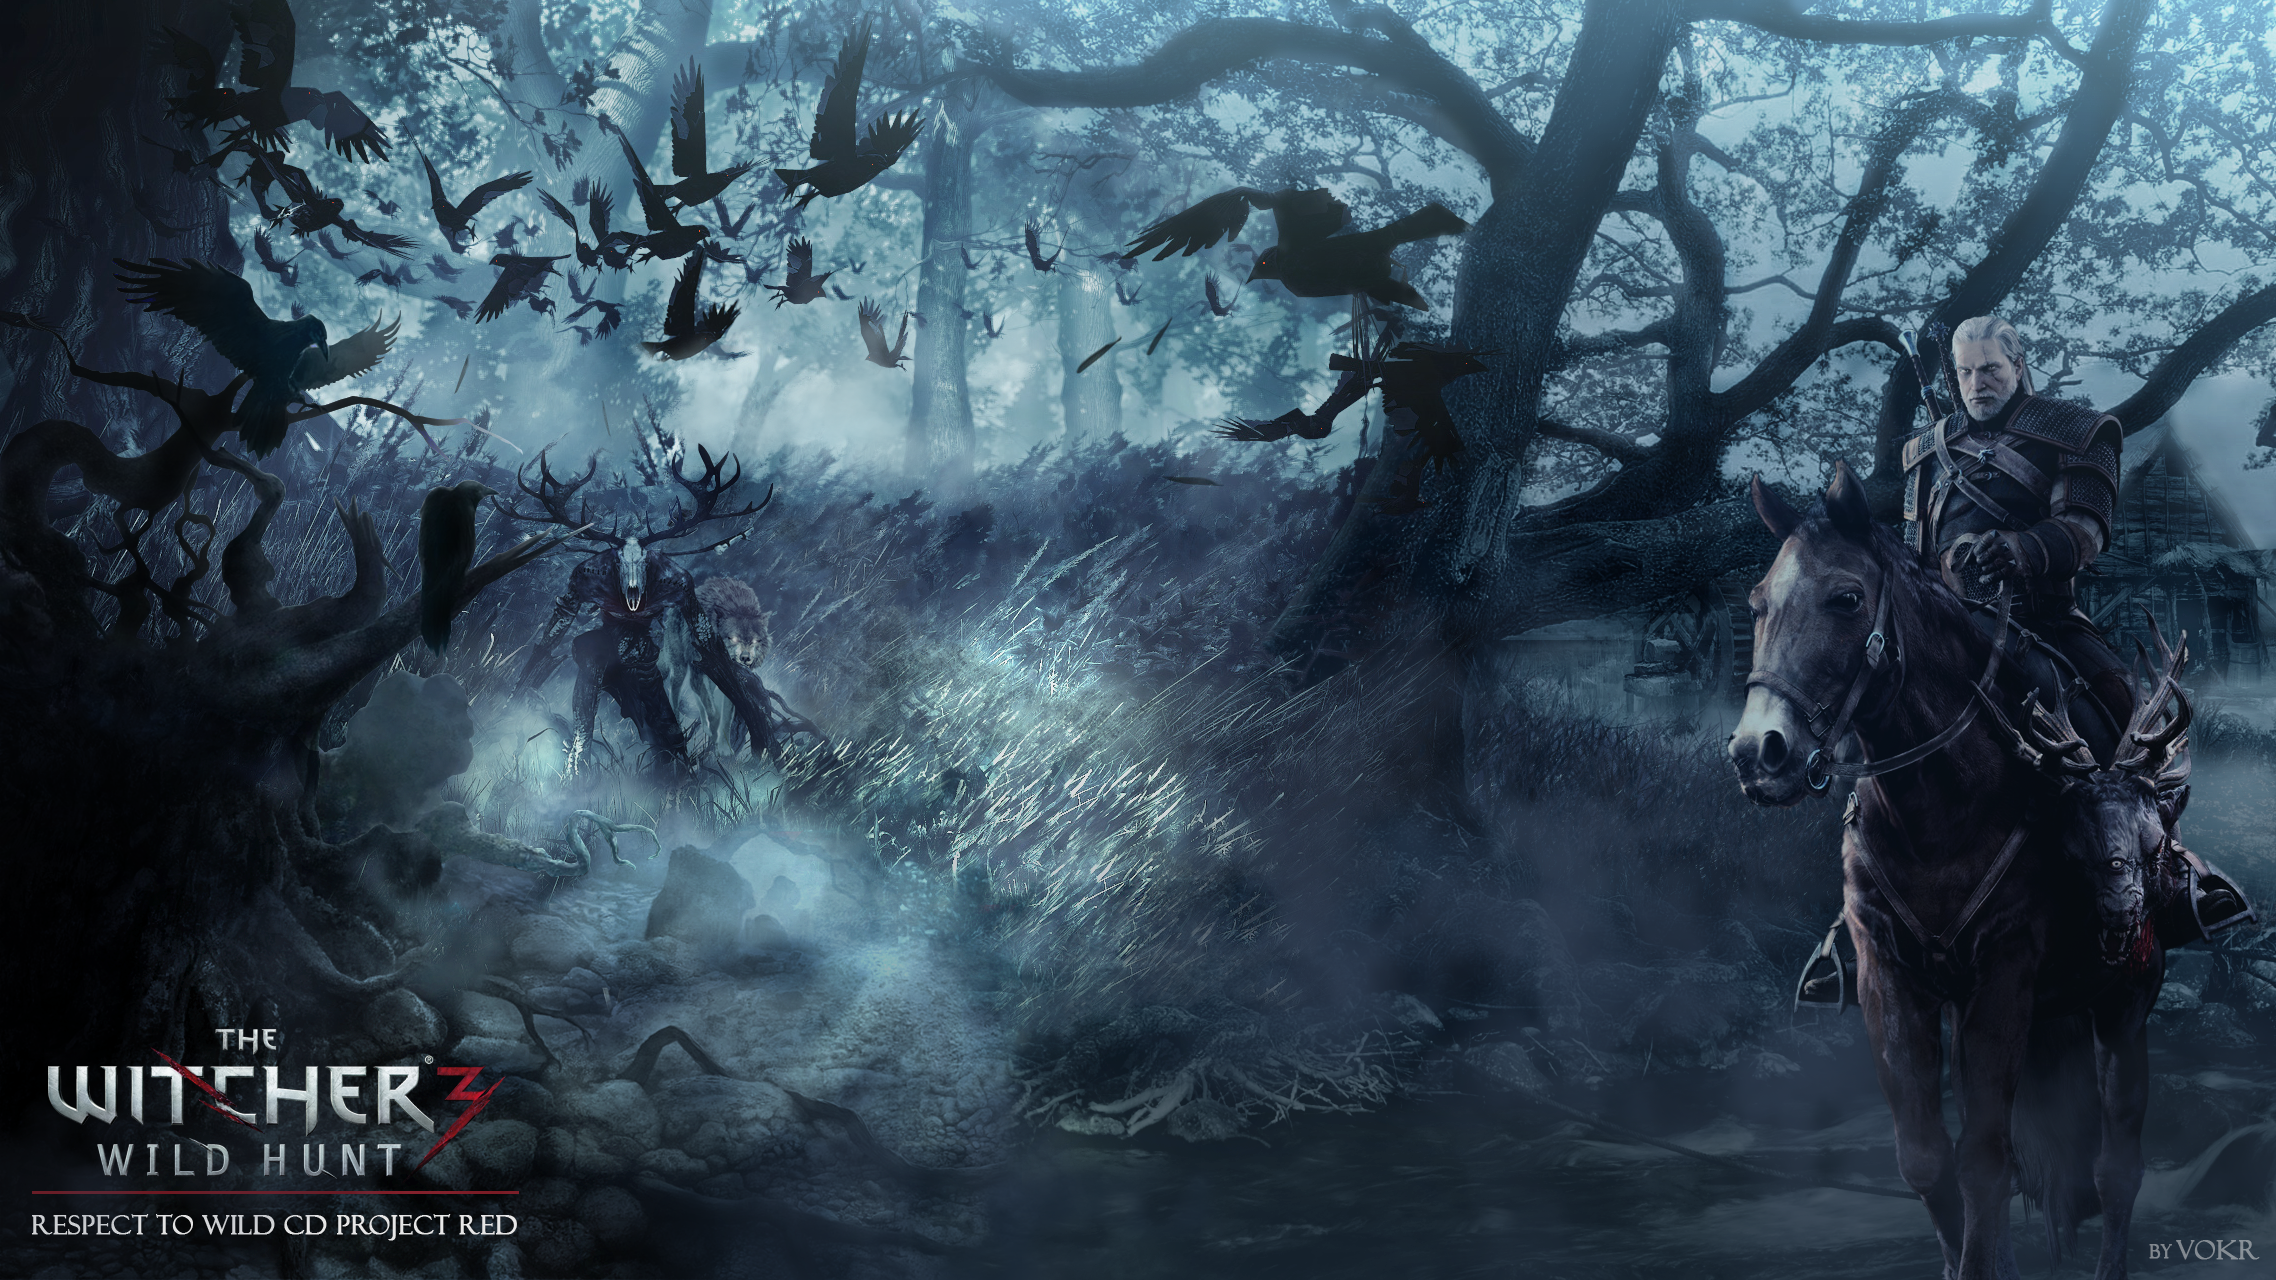 The Witcher 3 Wild Hunt Wallpaper by Vokr on DeviantArt